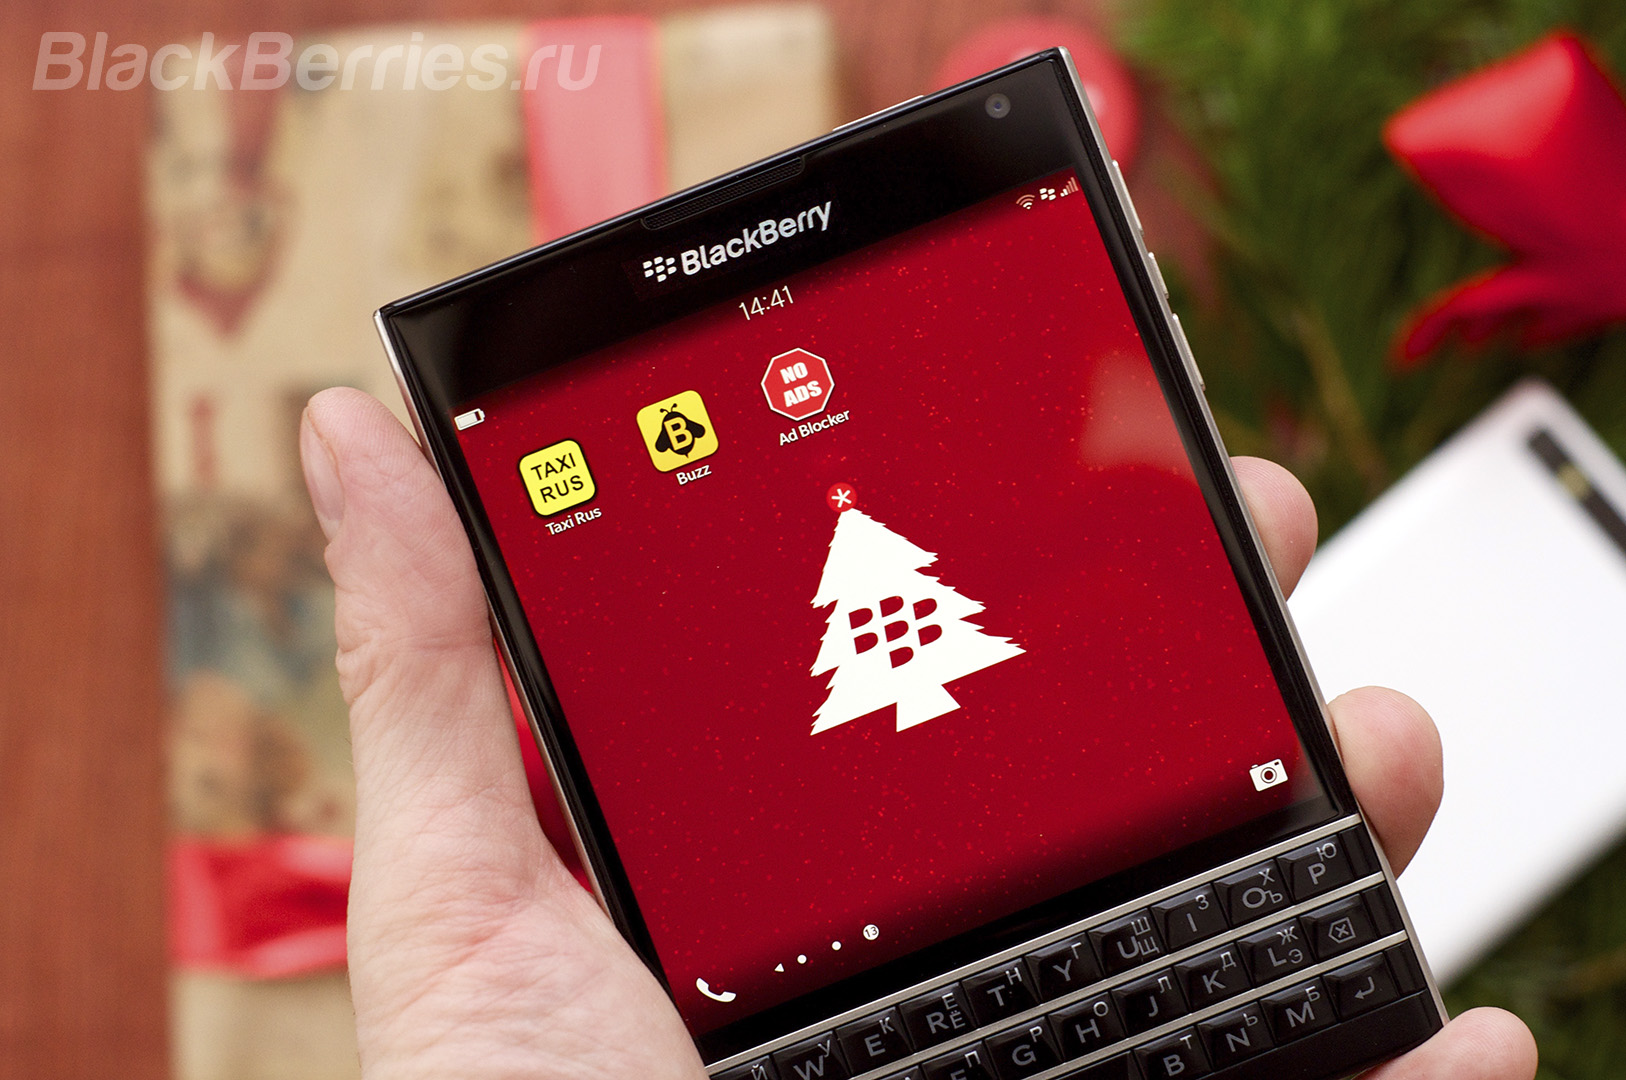 BlackBerry-New-Year-Apps-08